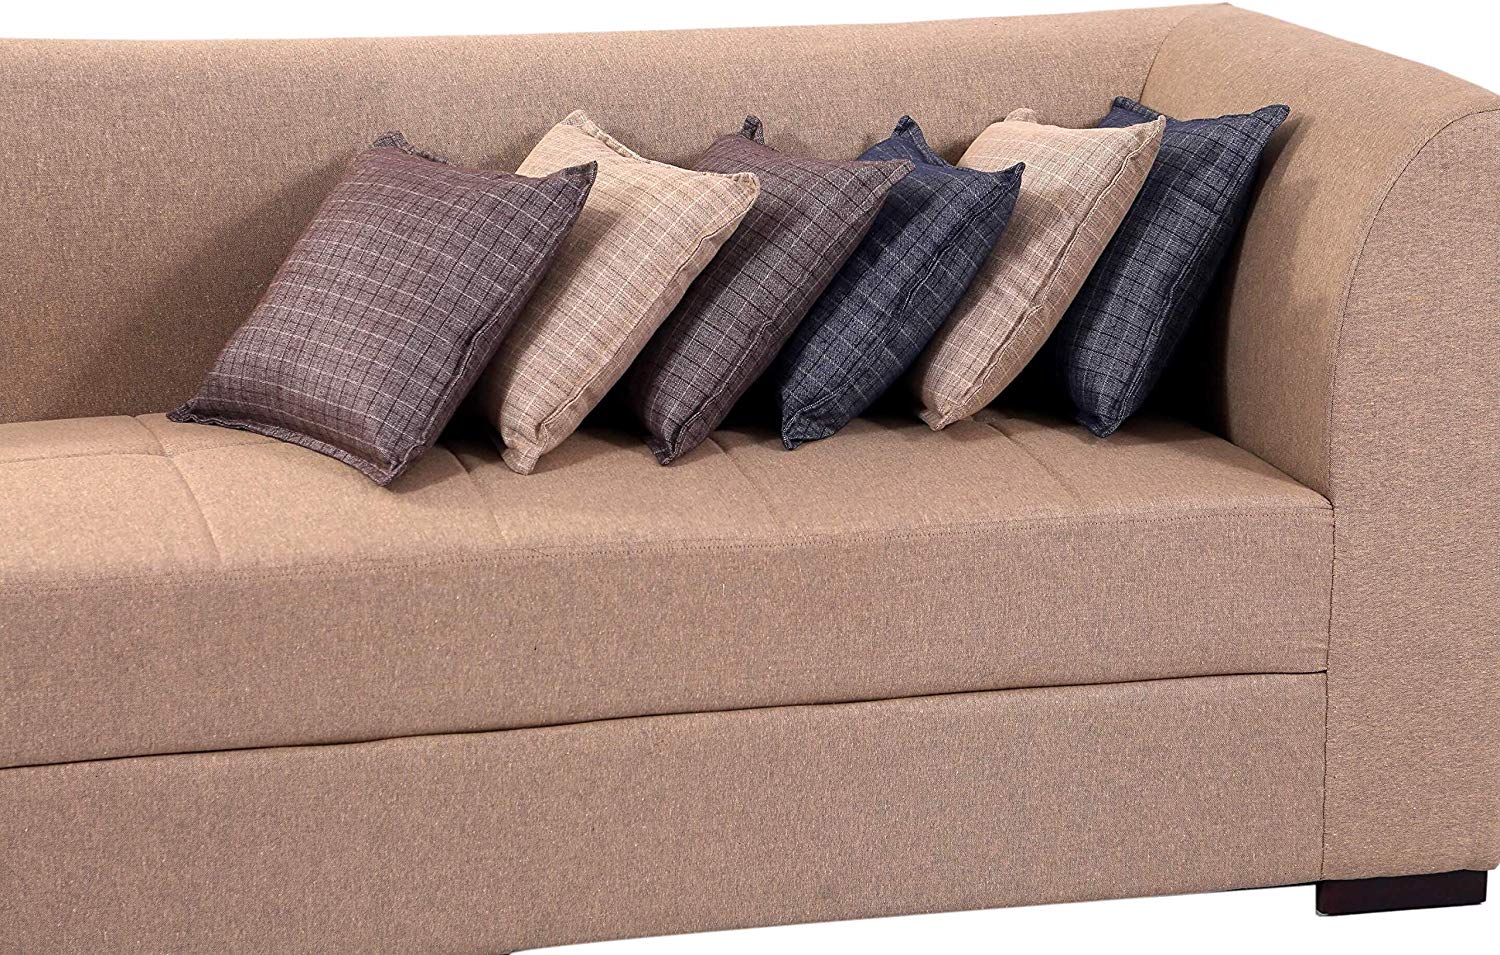 L Shape Sofa Set:- Rome 6 Seater Fabric Sofa Set (Tan Brown)